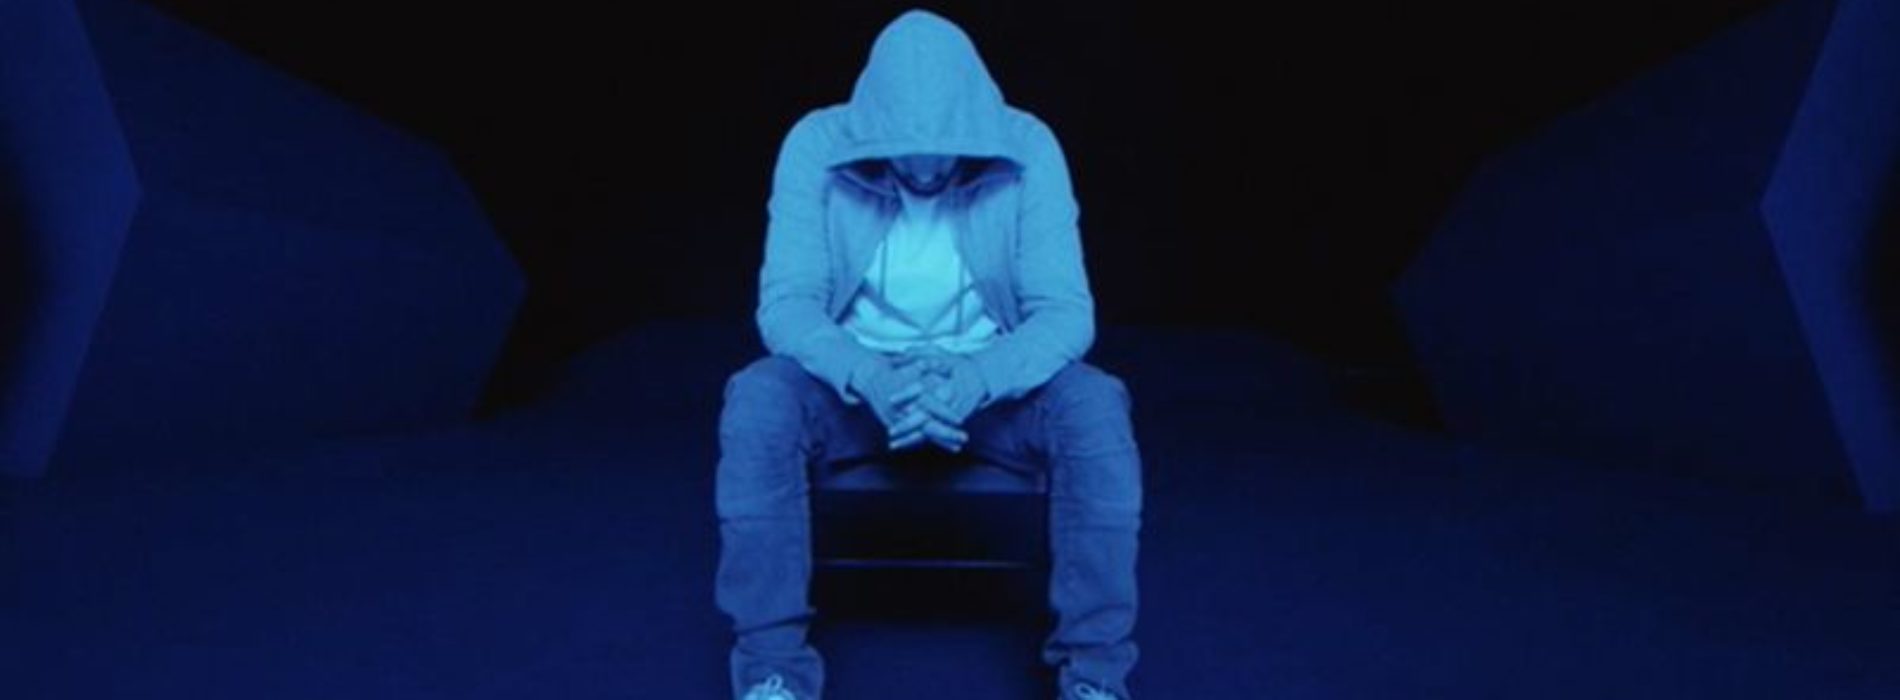 Eminem – Darkness (Official Video) – Janvier 2020